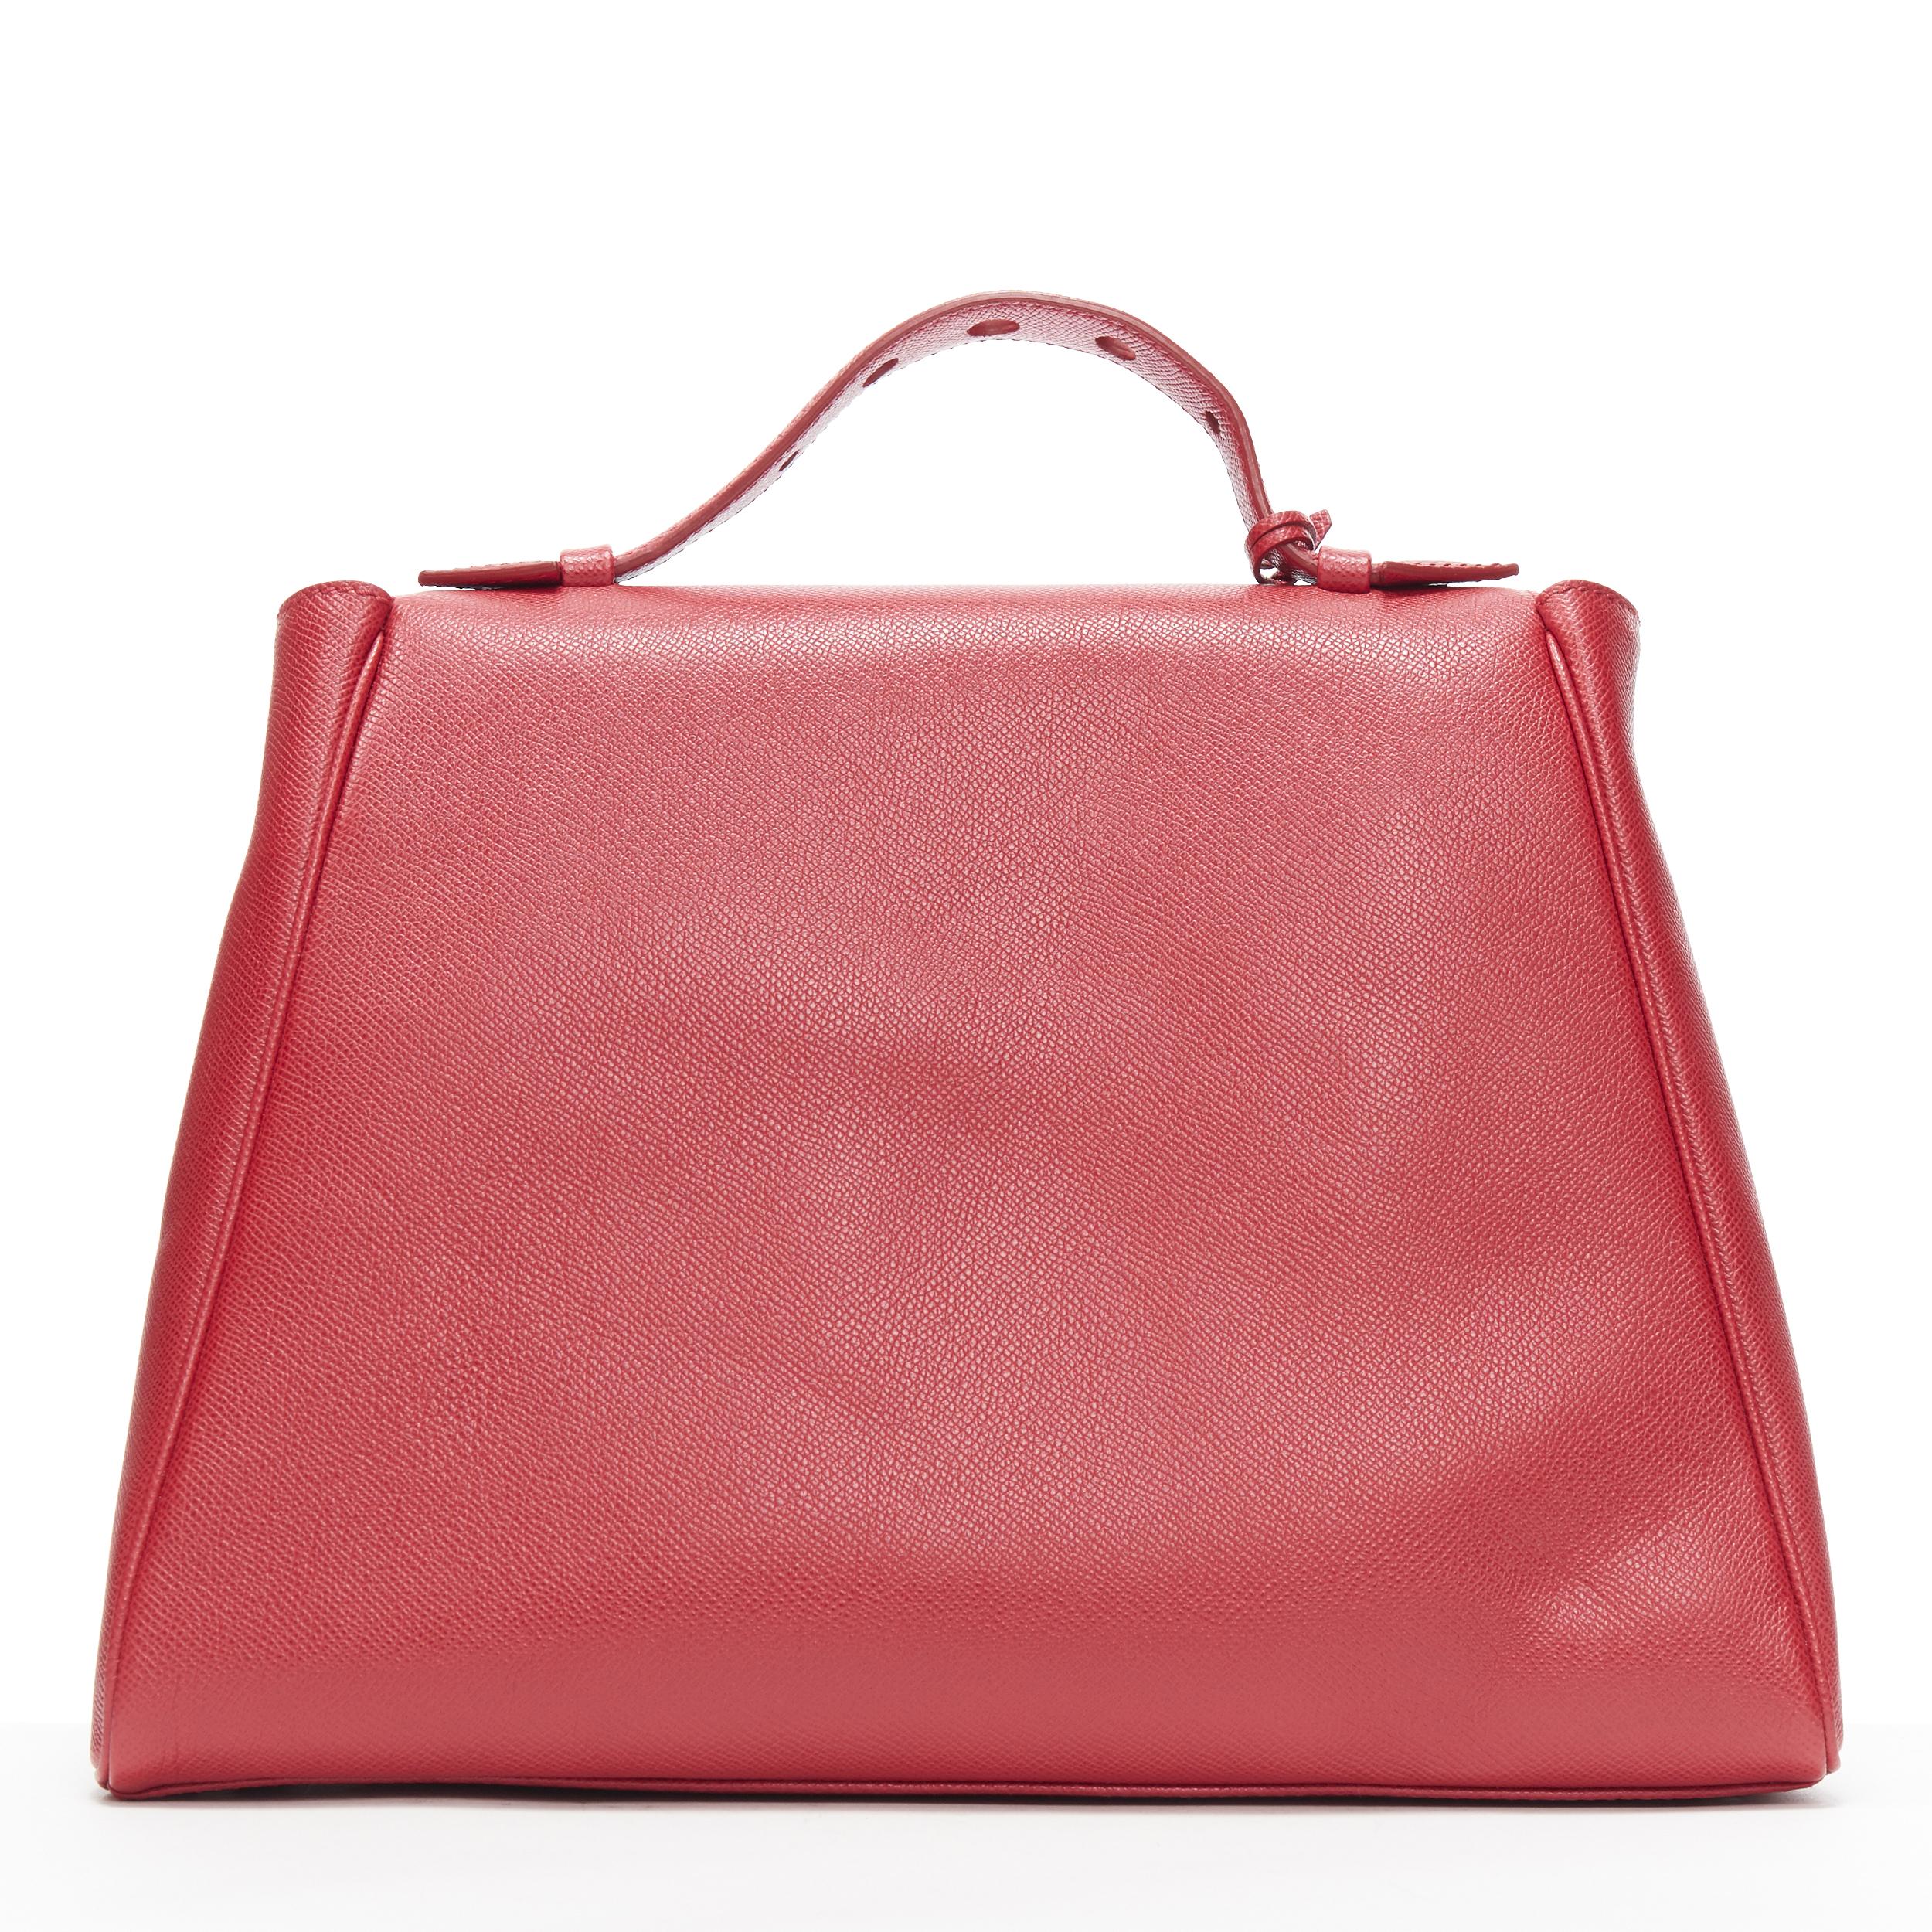 Red MYRIAM SCHAEFER Byron red leather cut out top handle satchel shoulder bag